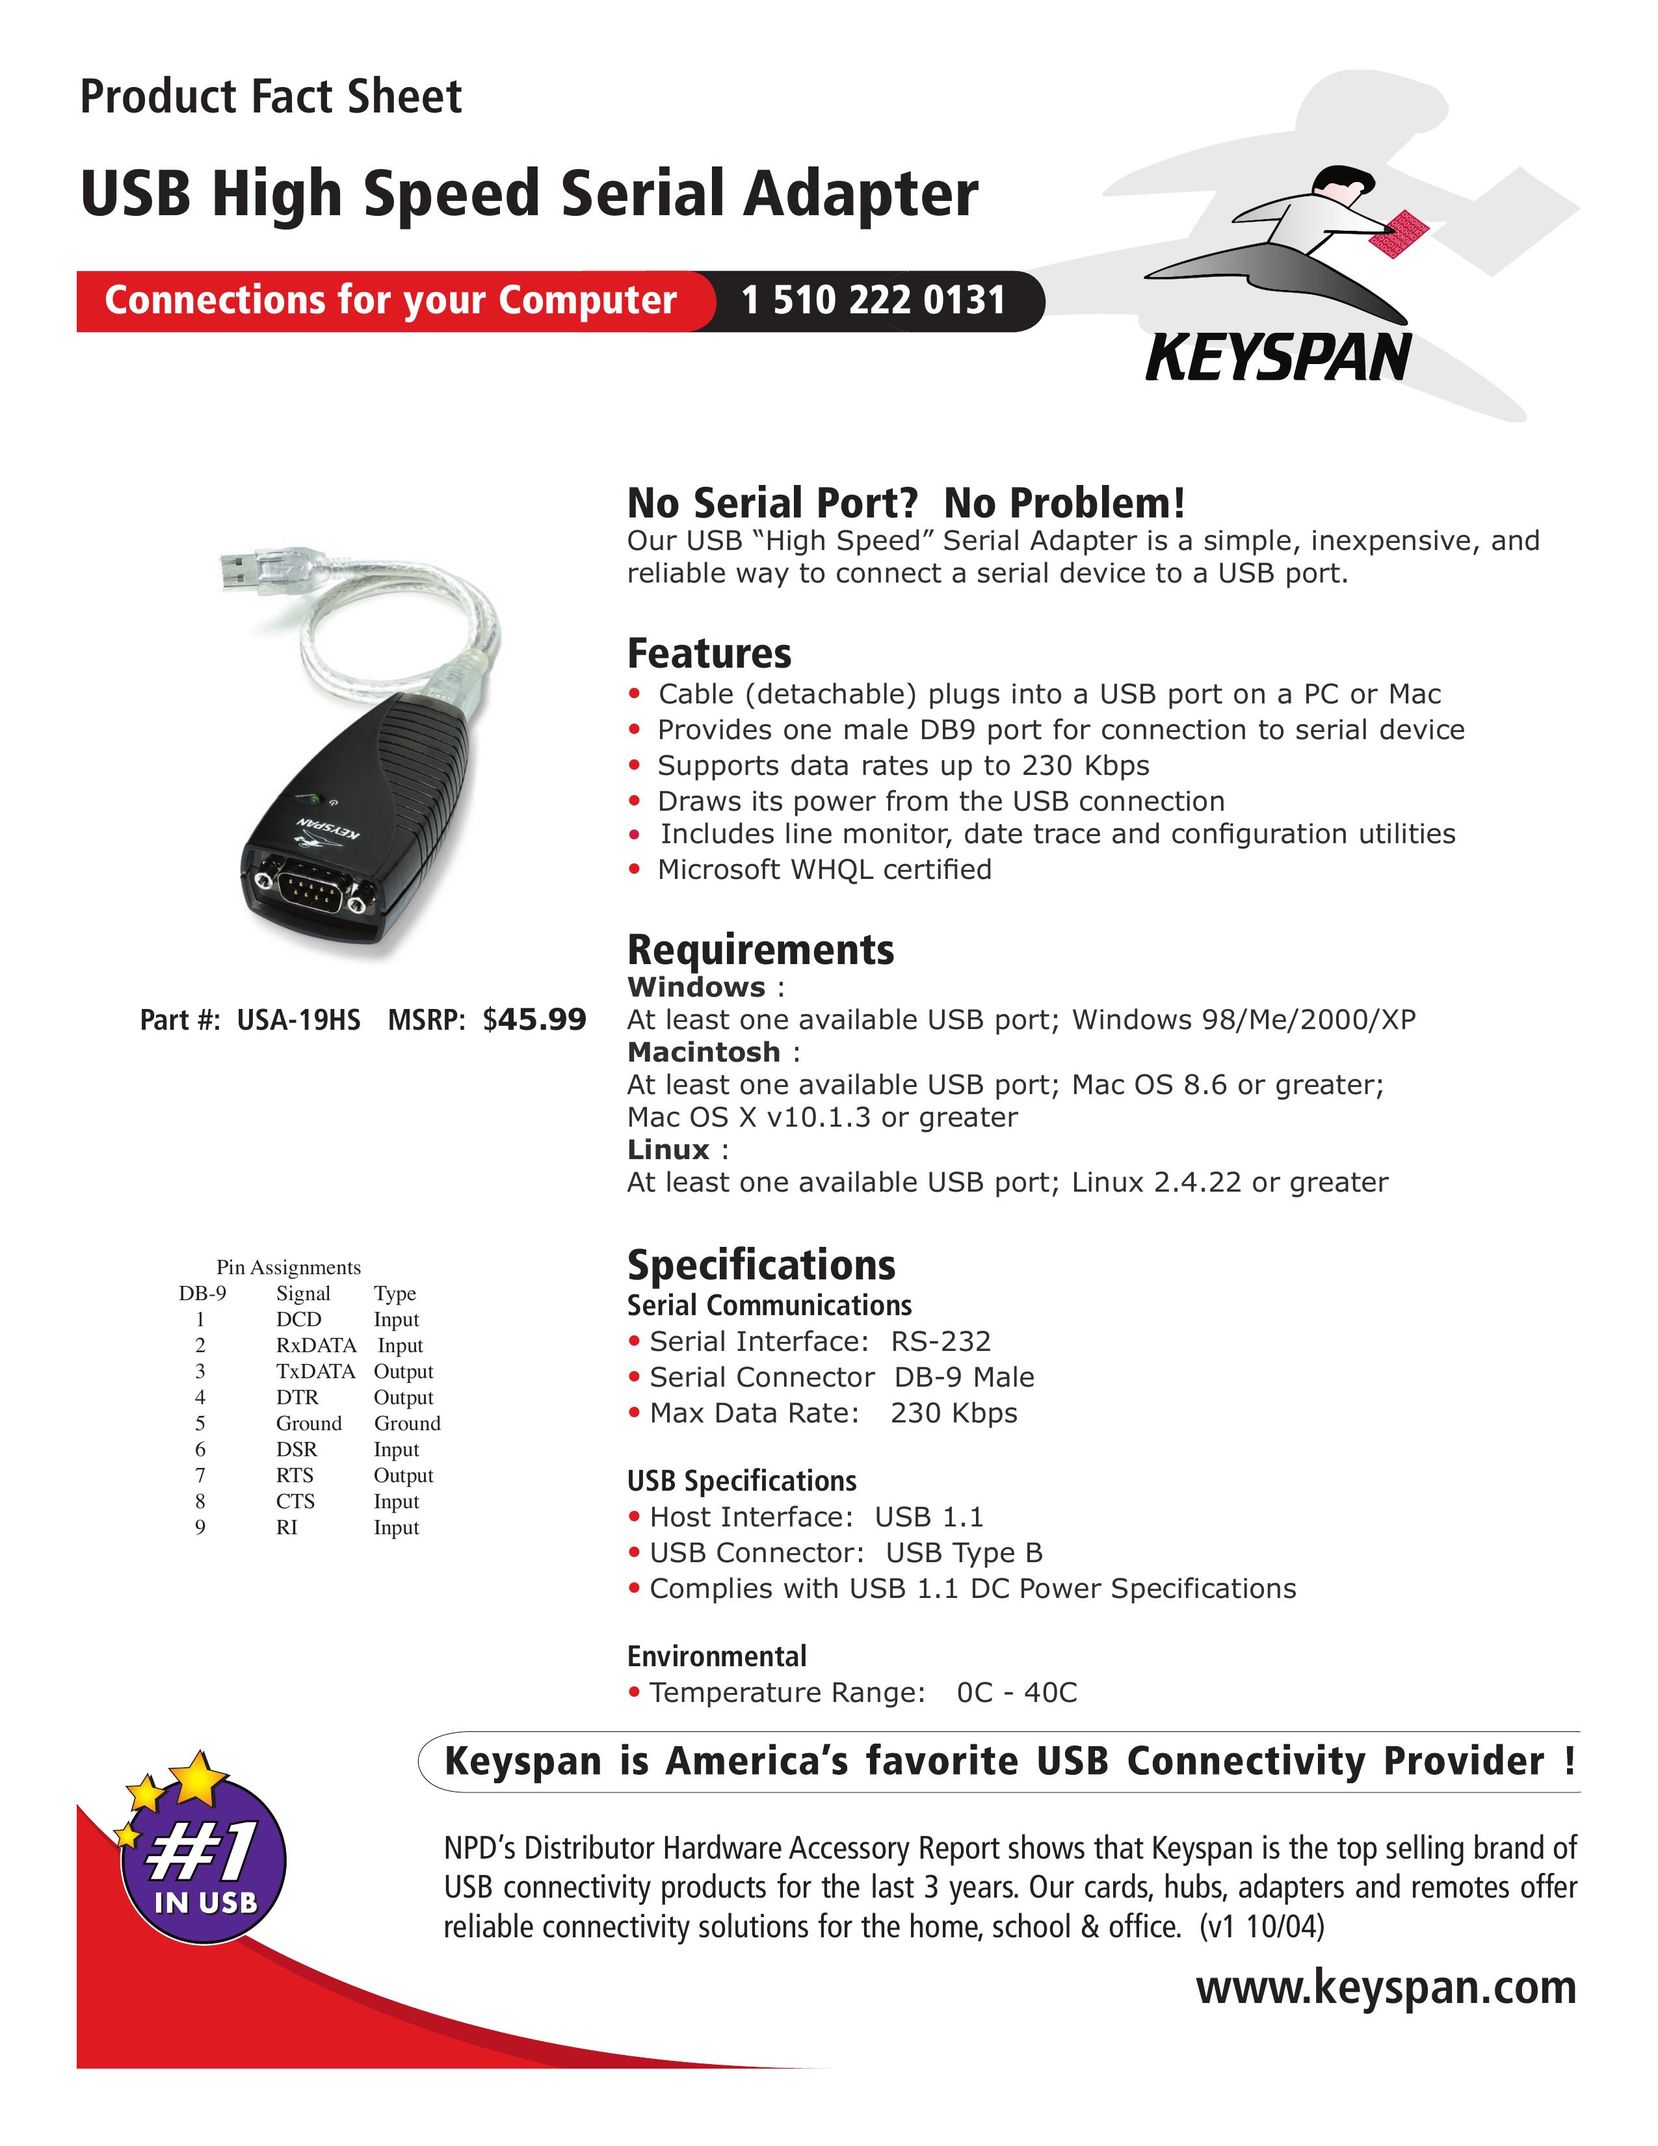 Keyspan USA-19HS Network Card User Manual